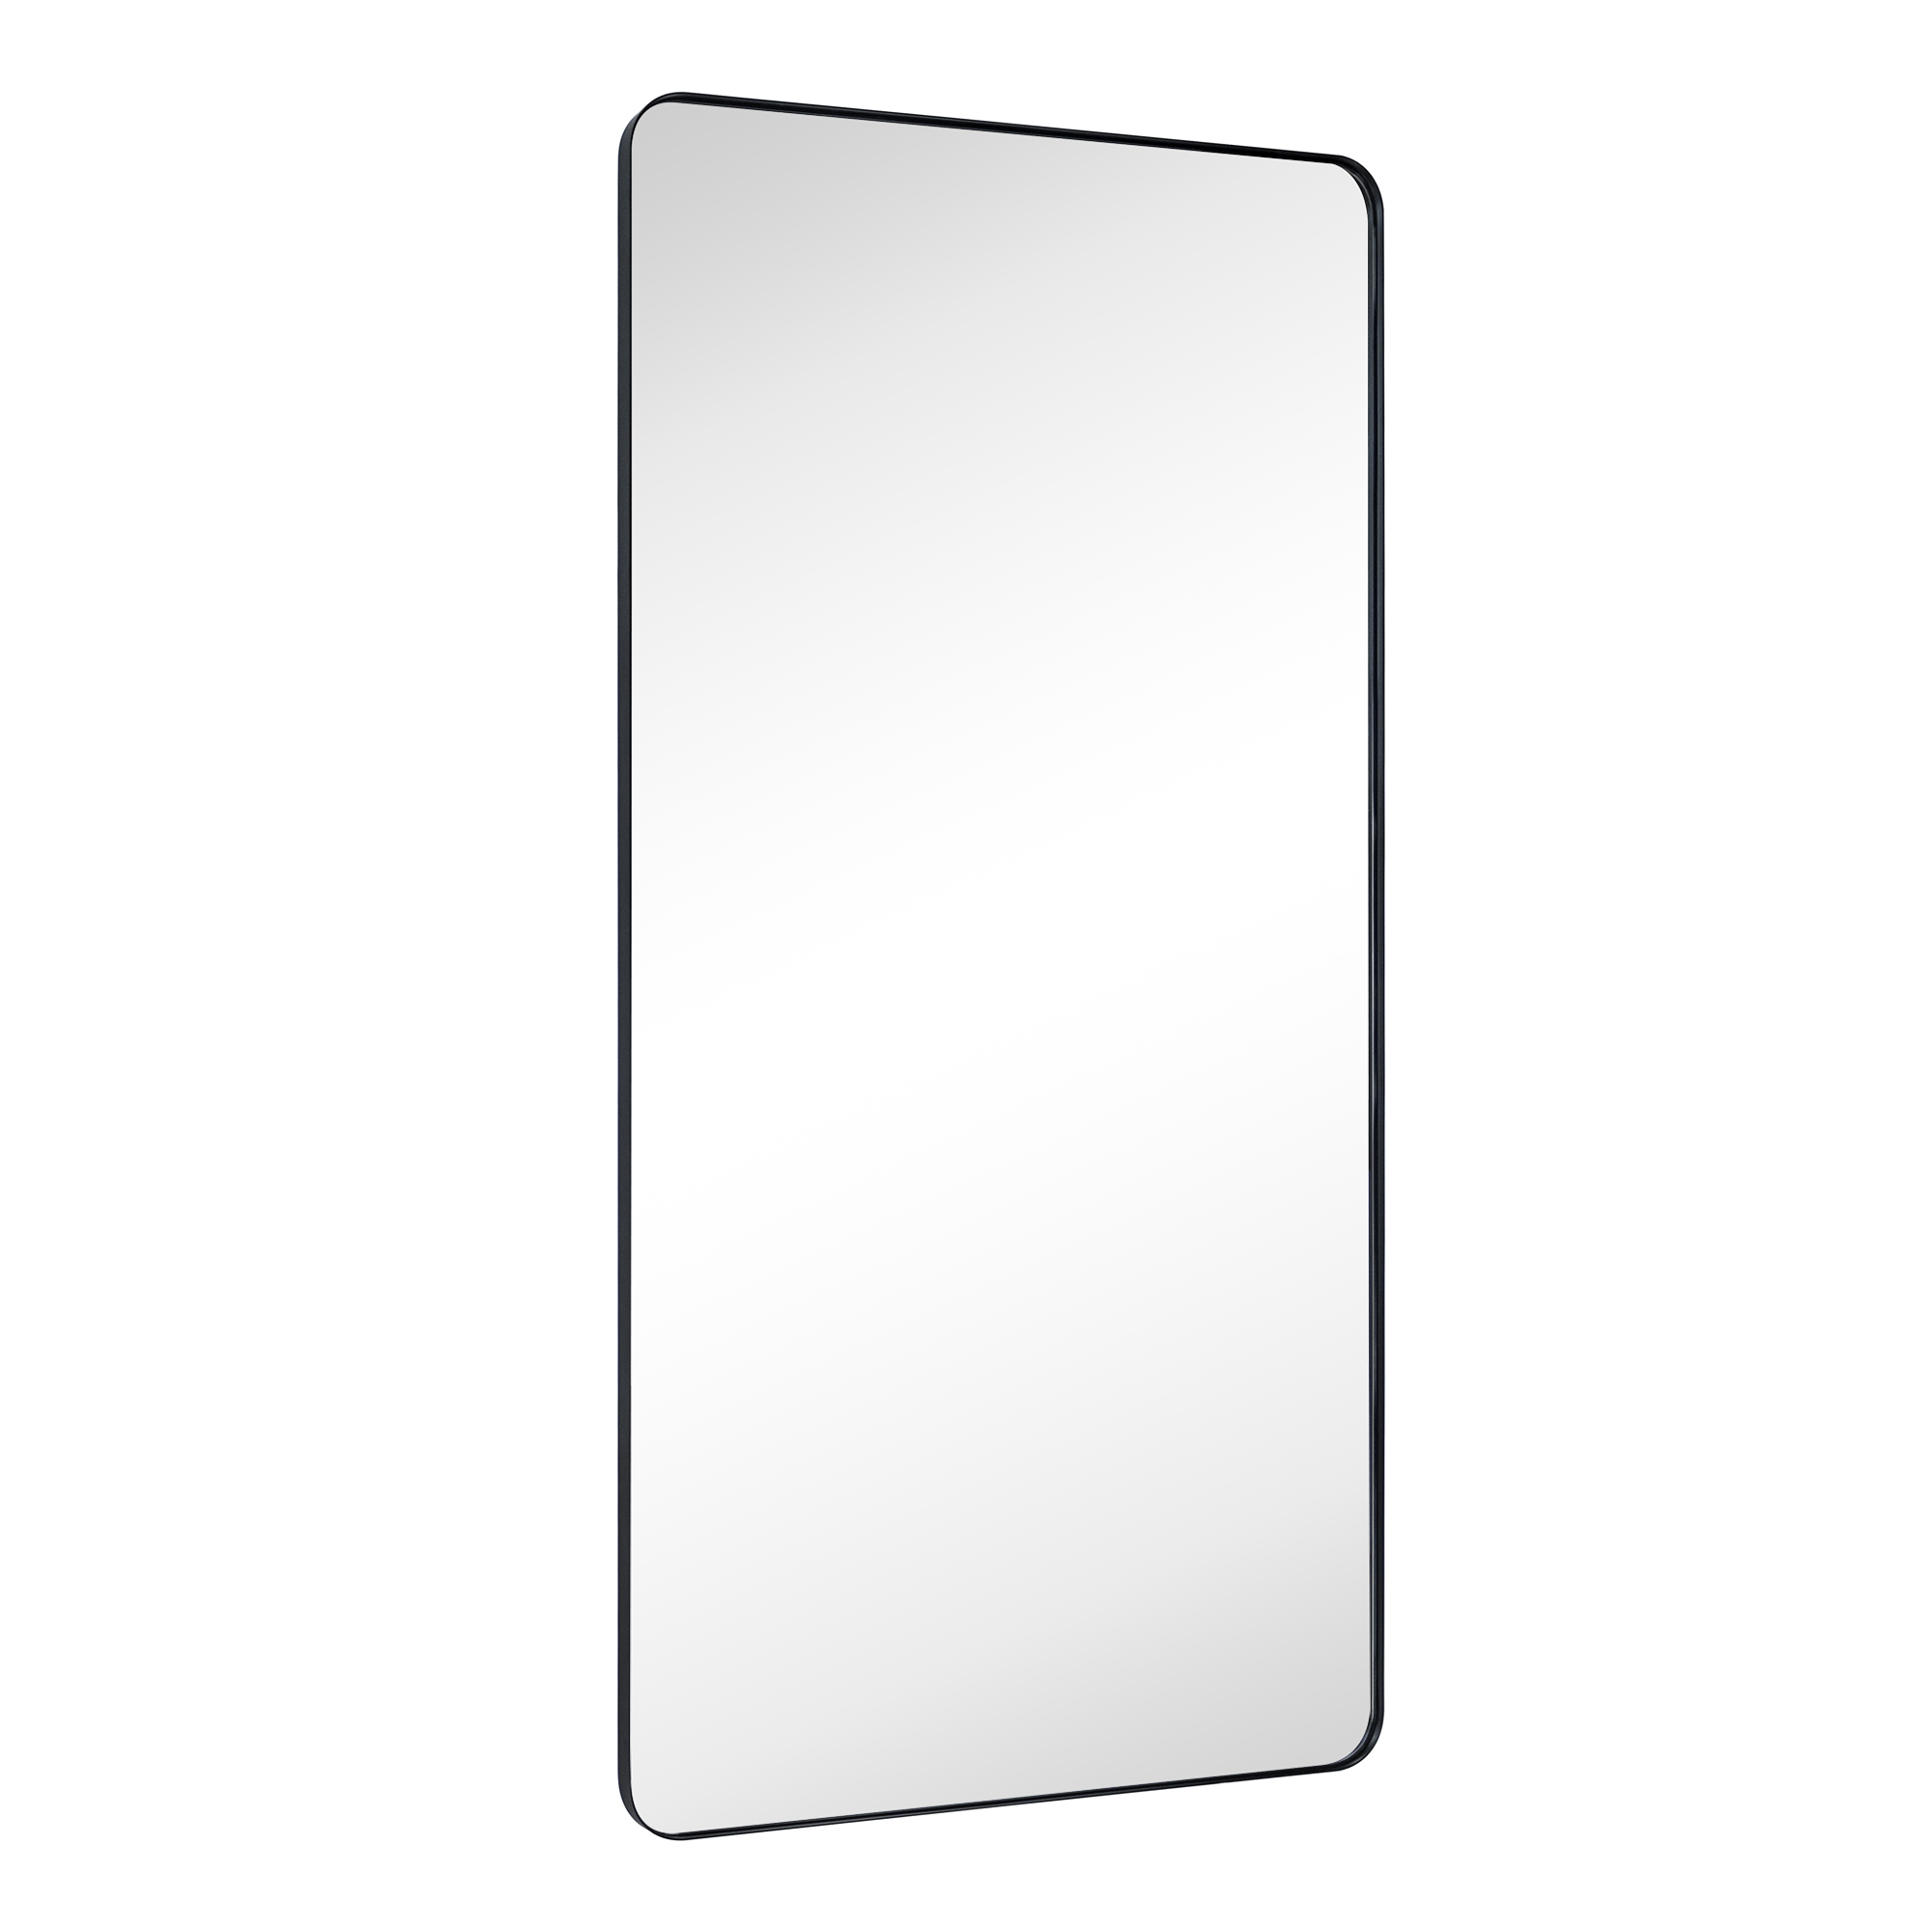 Kengston Modern & Contemporary Rectangular Bathroom Vanity Mirrors-30x60-Black